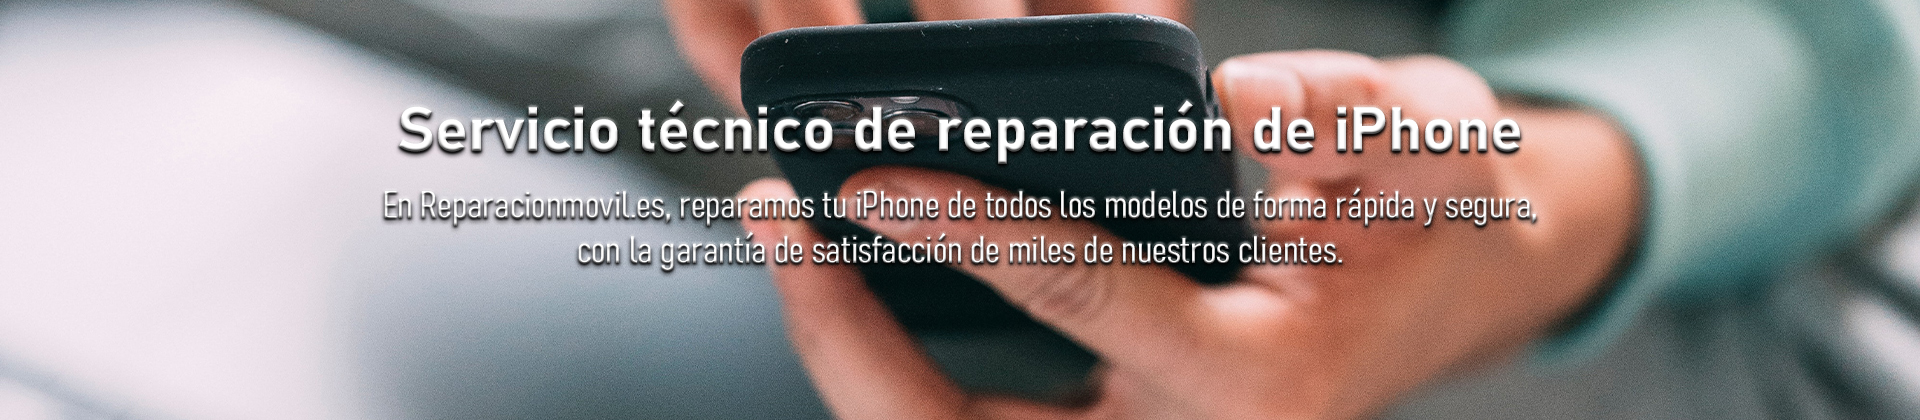 Baner reparacion iPhone